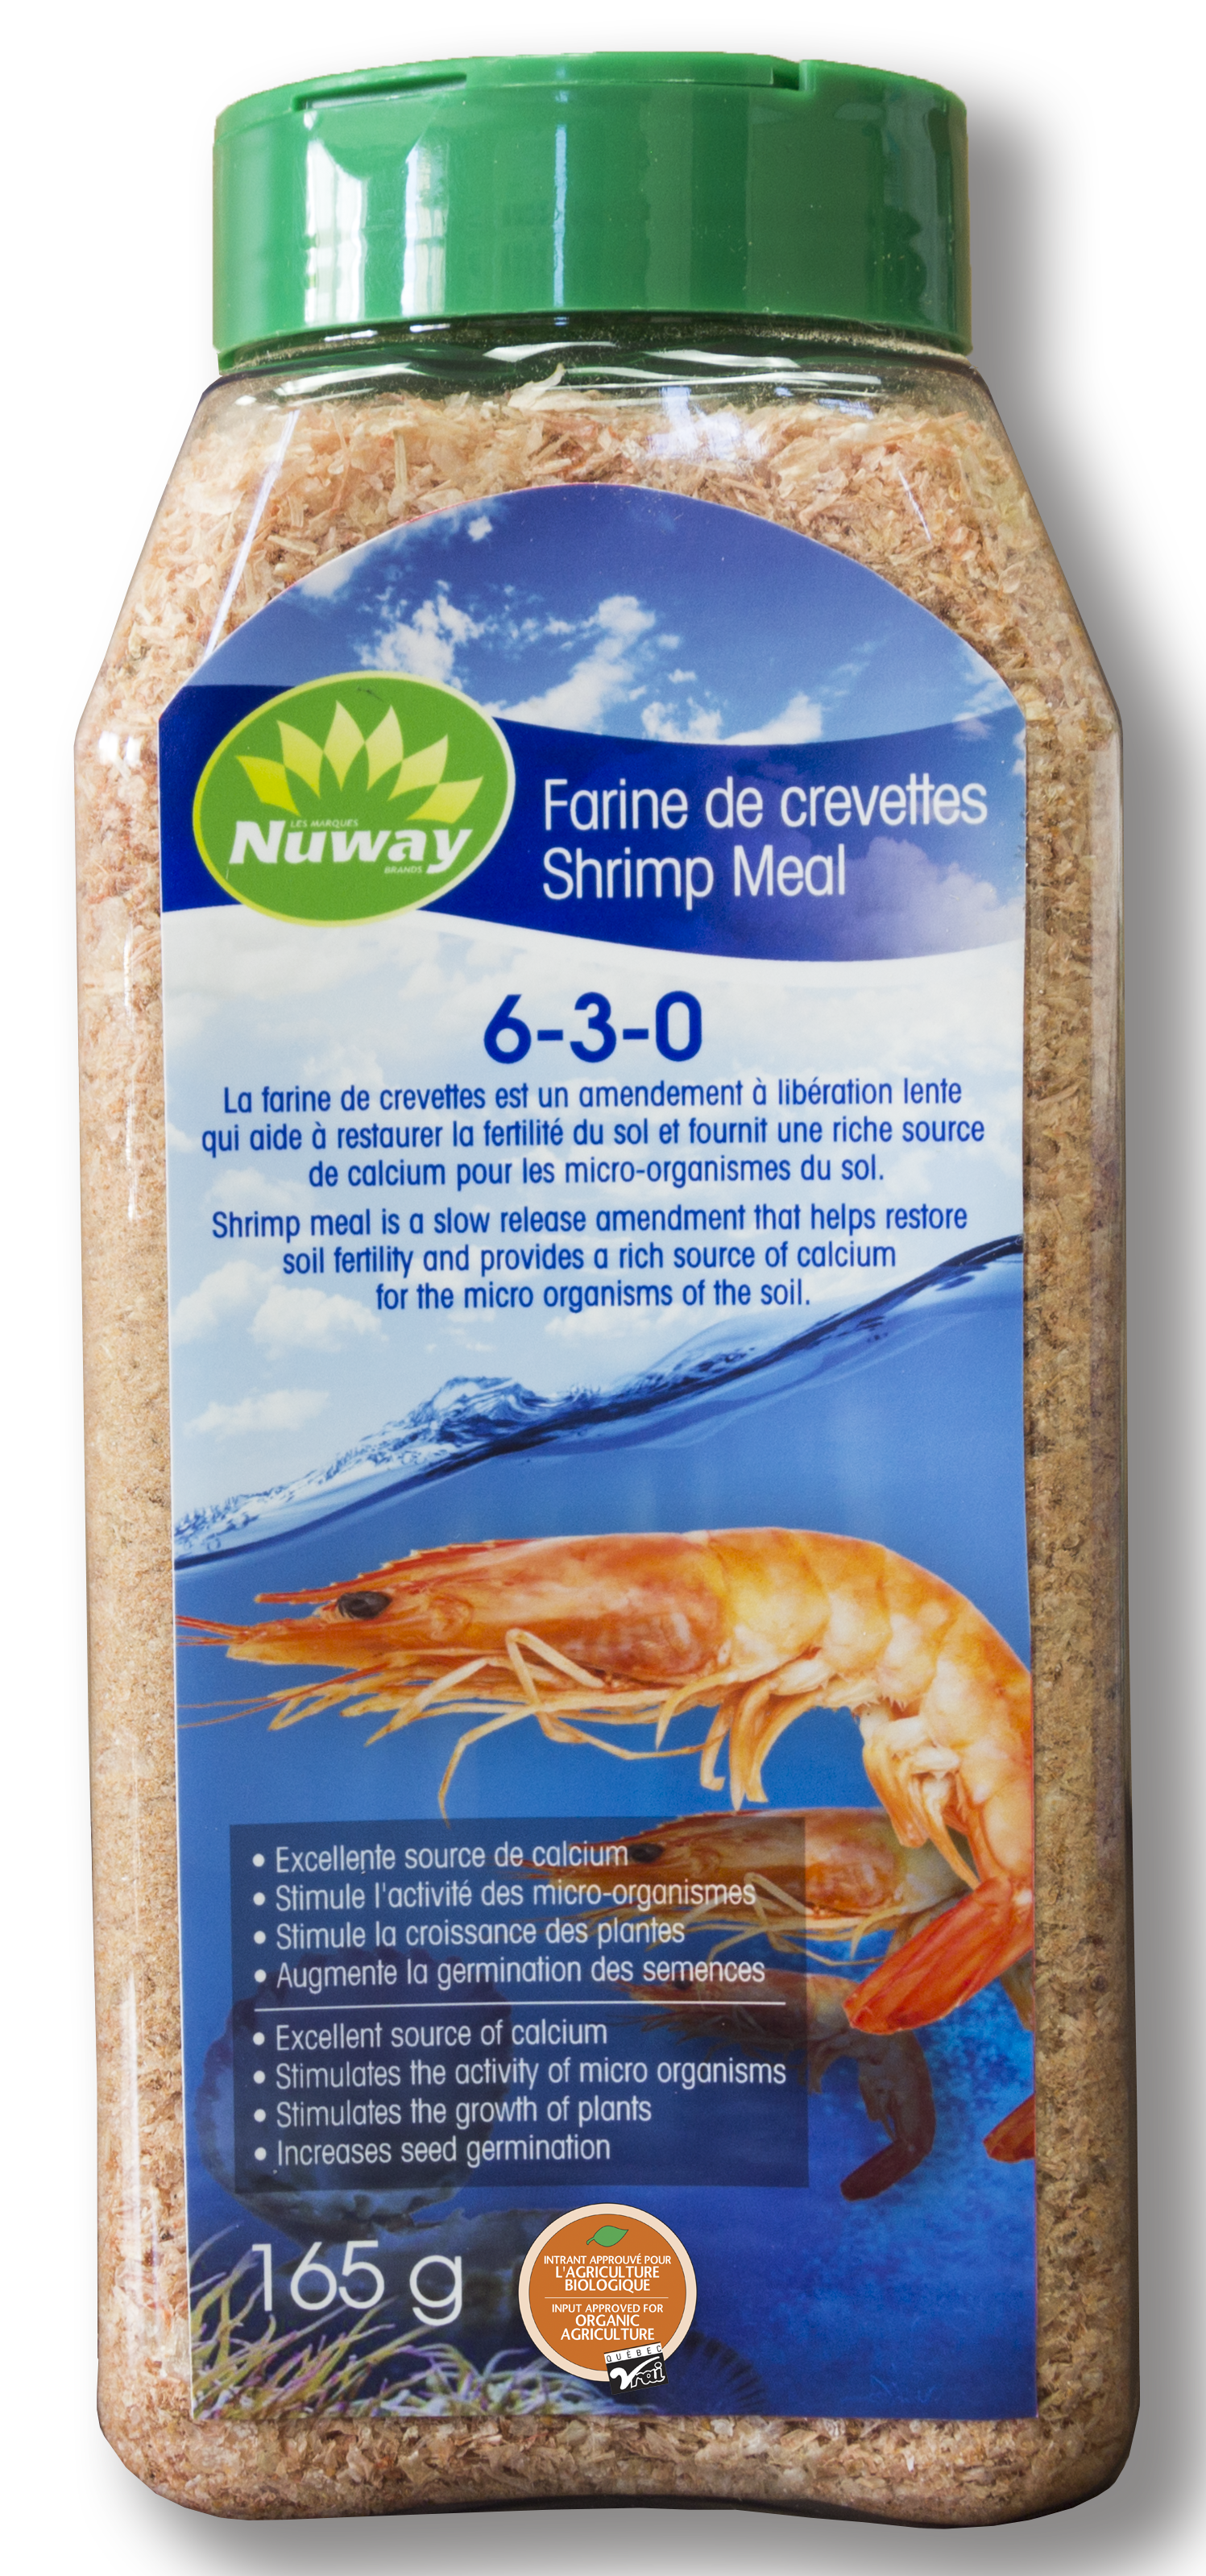 farine-de-crevettes-nuway-165-g_1_modifie-1